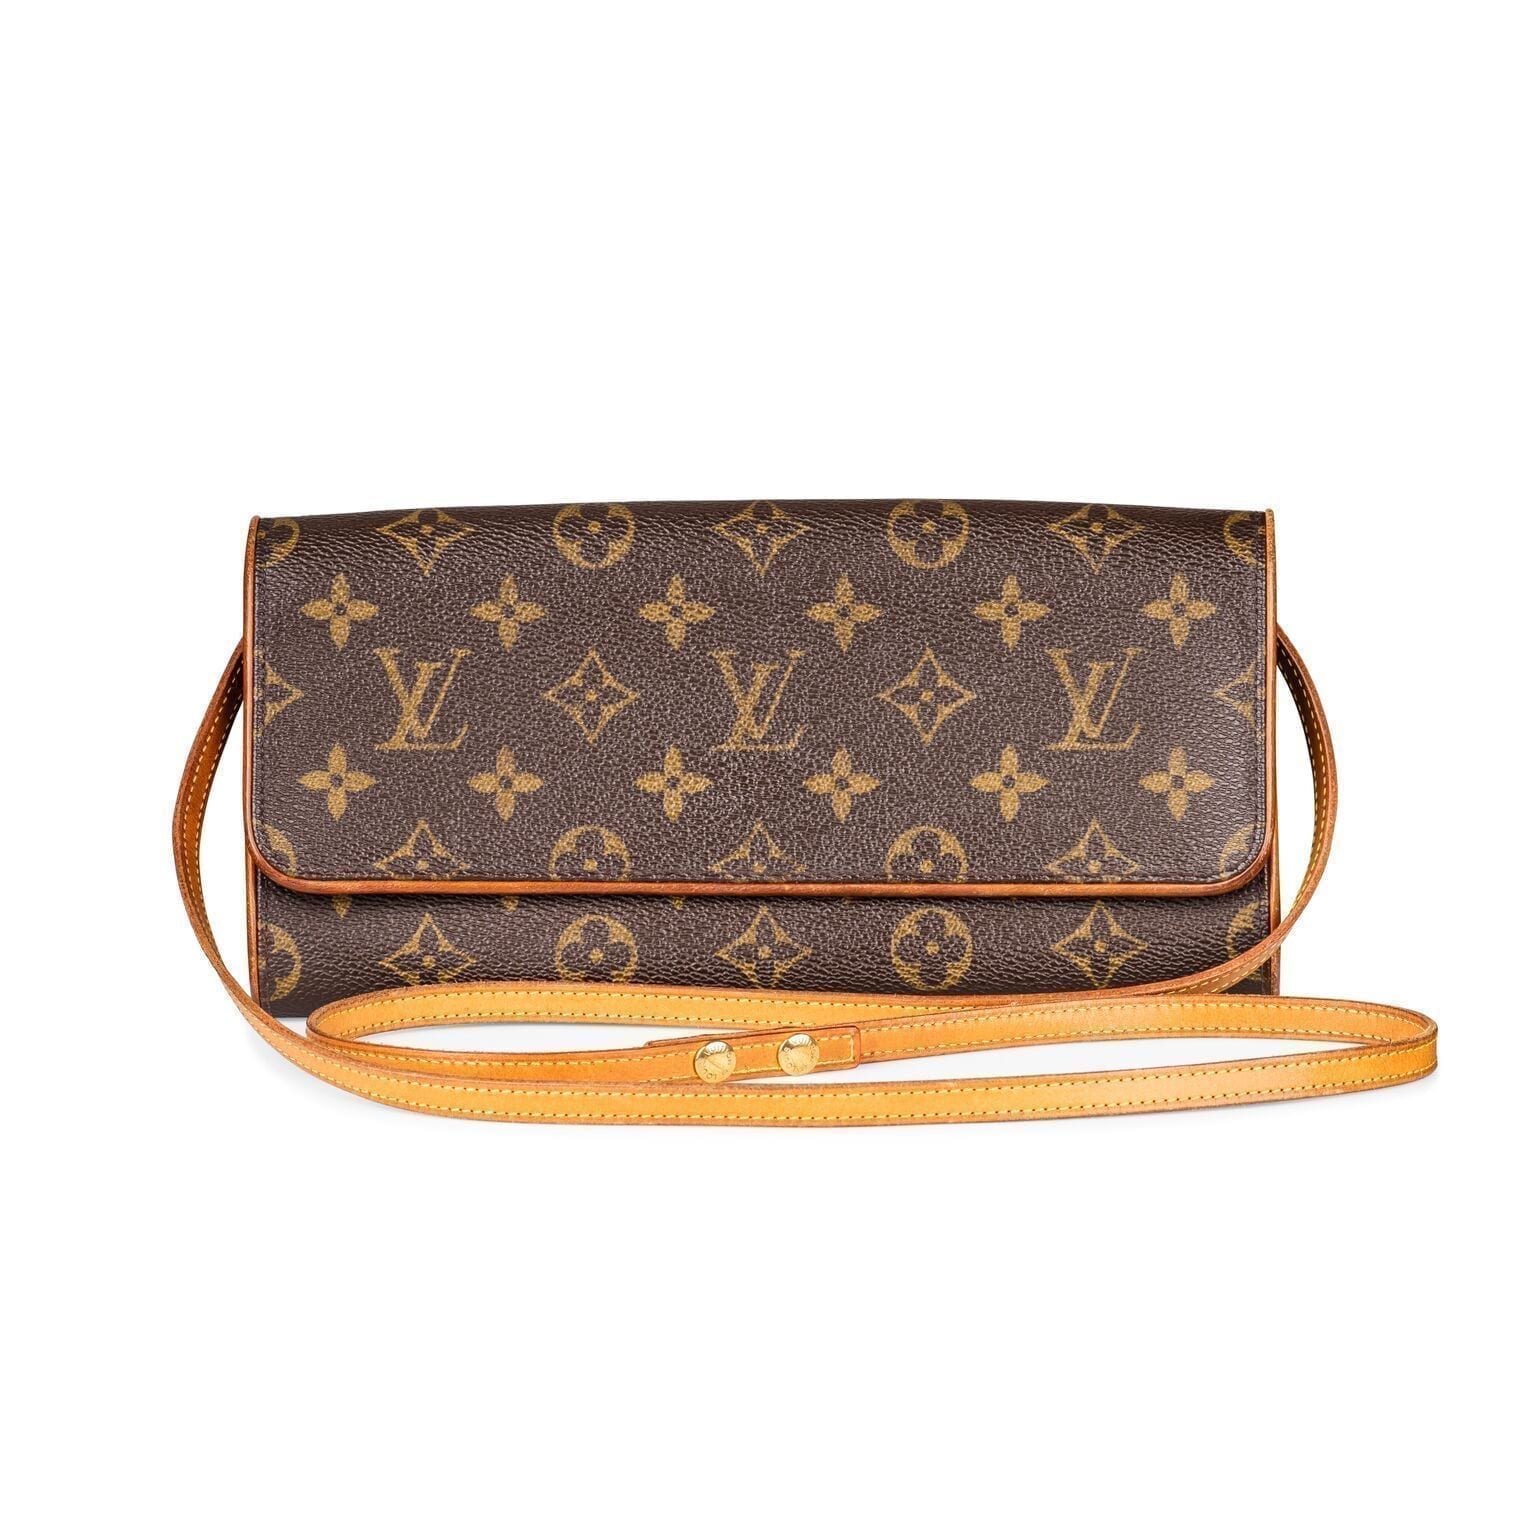 Louis Vuitton Clutch Purse Crossbody Bag Wallet Case Keweenaw Bay Indian Community